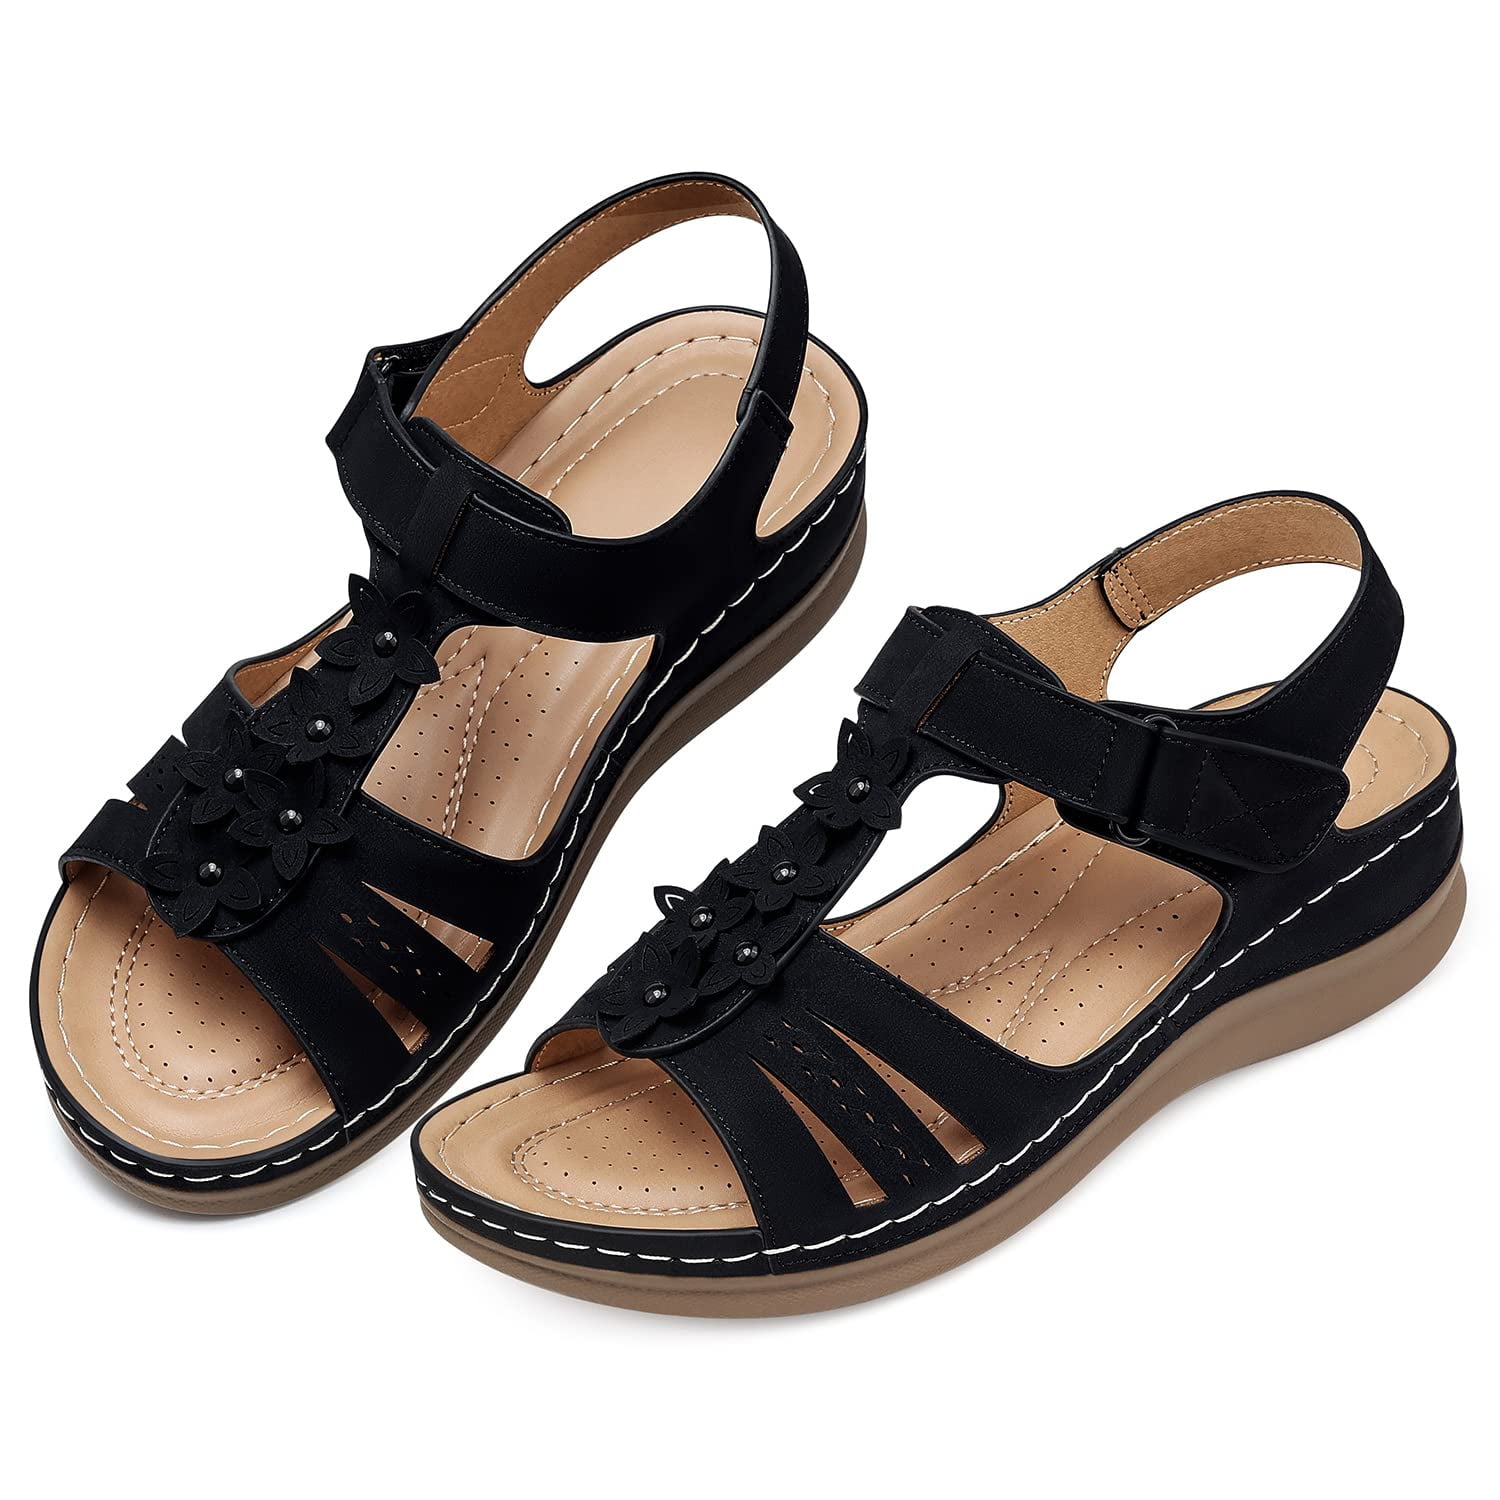 FAMITION Women's Wedge Sandals Summer Ankle Strap Platform Sandal Open ...